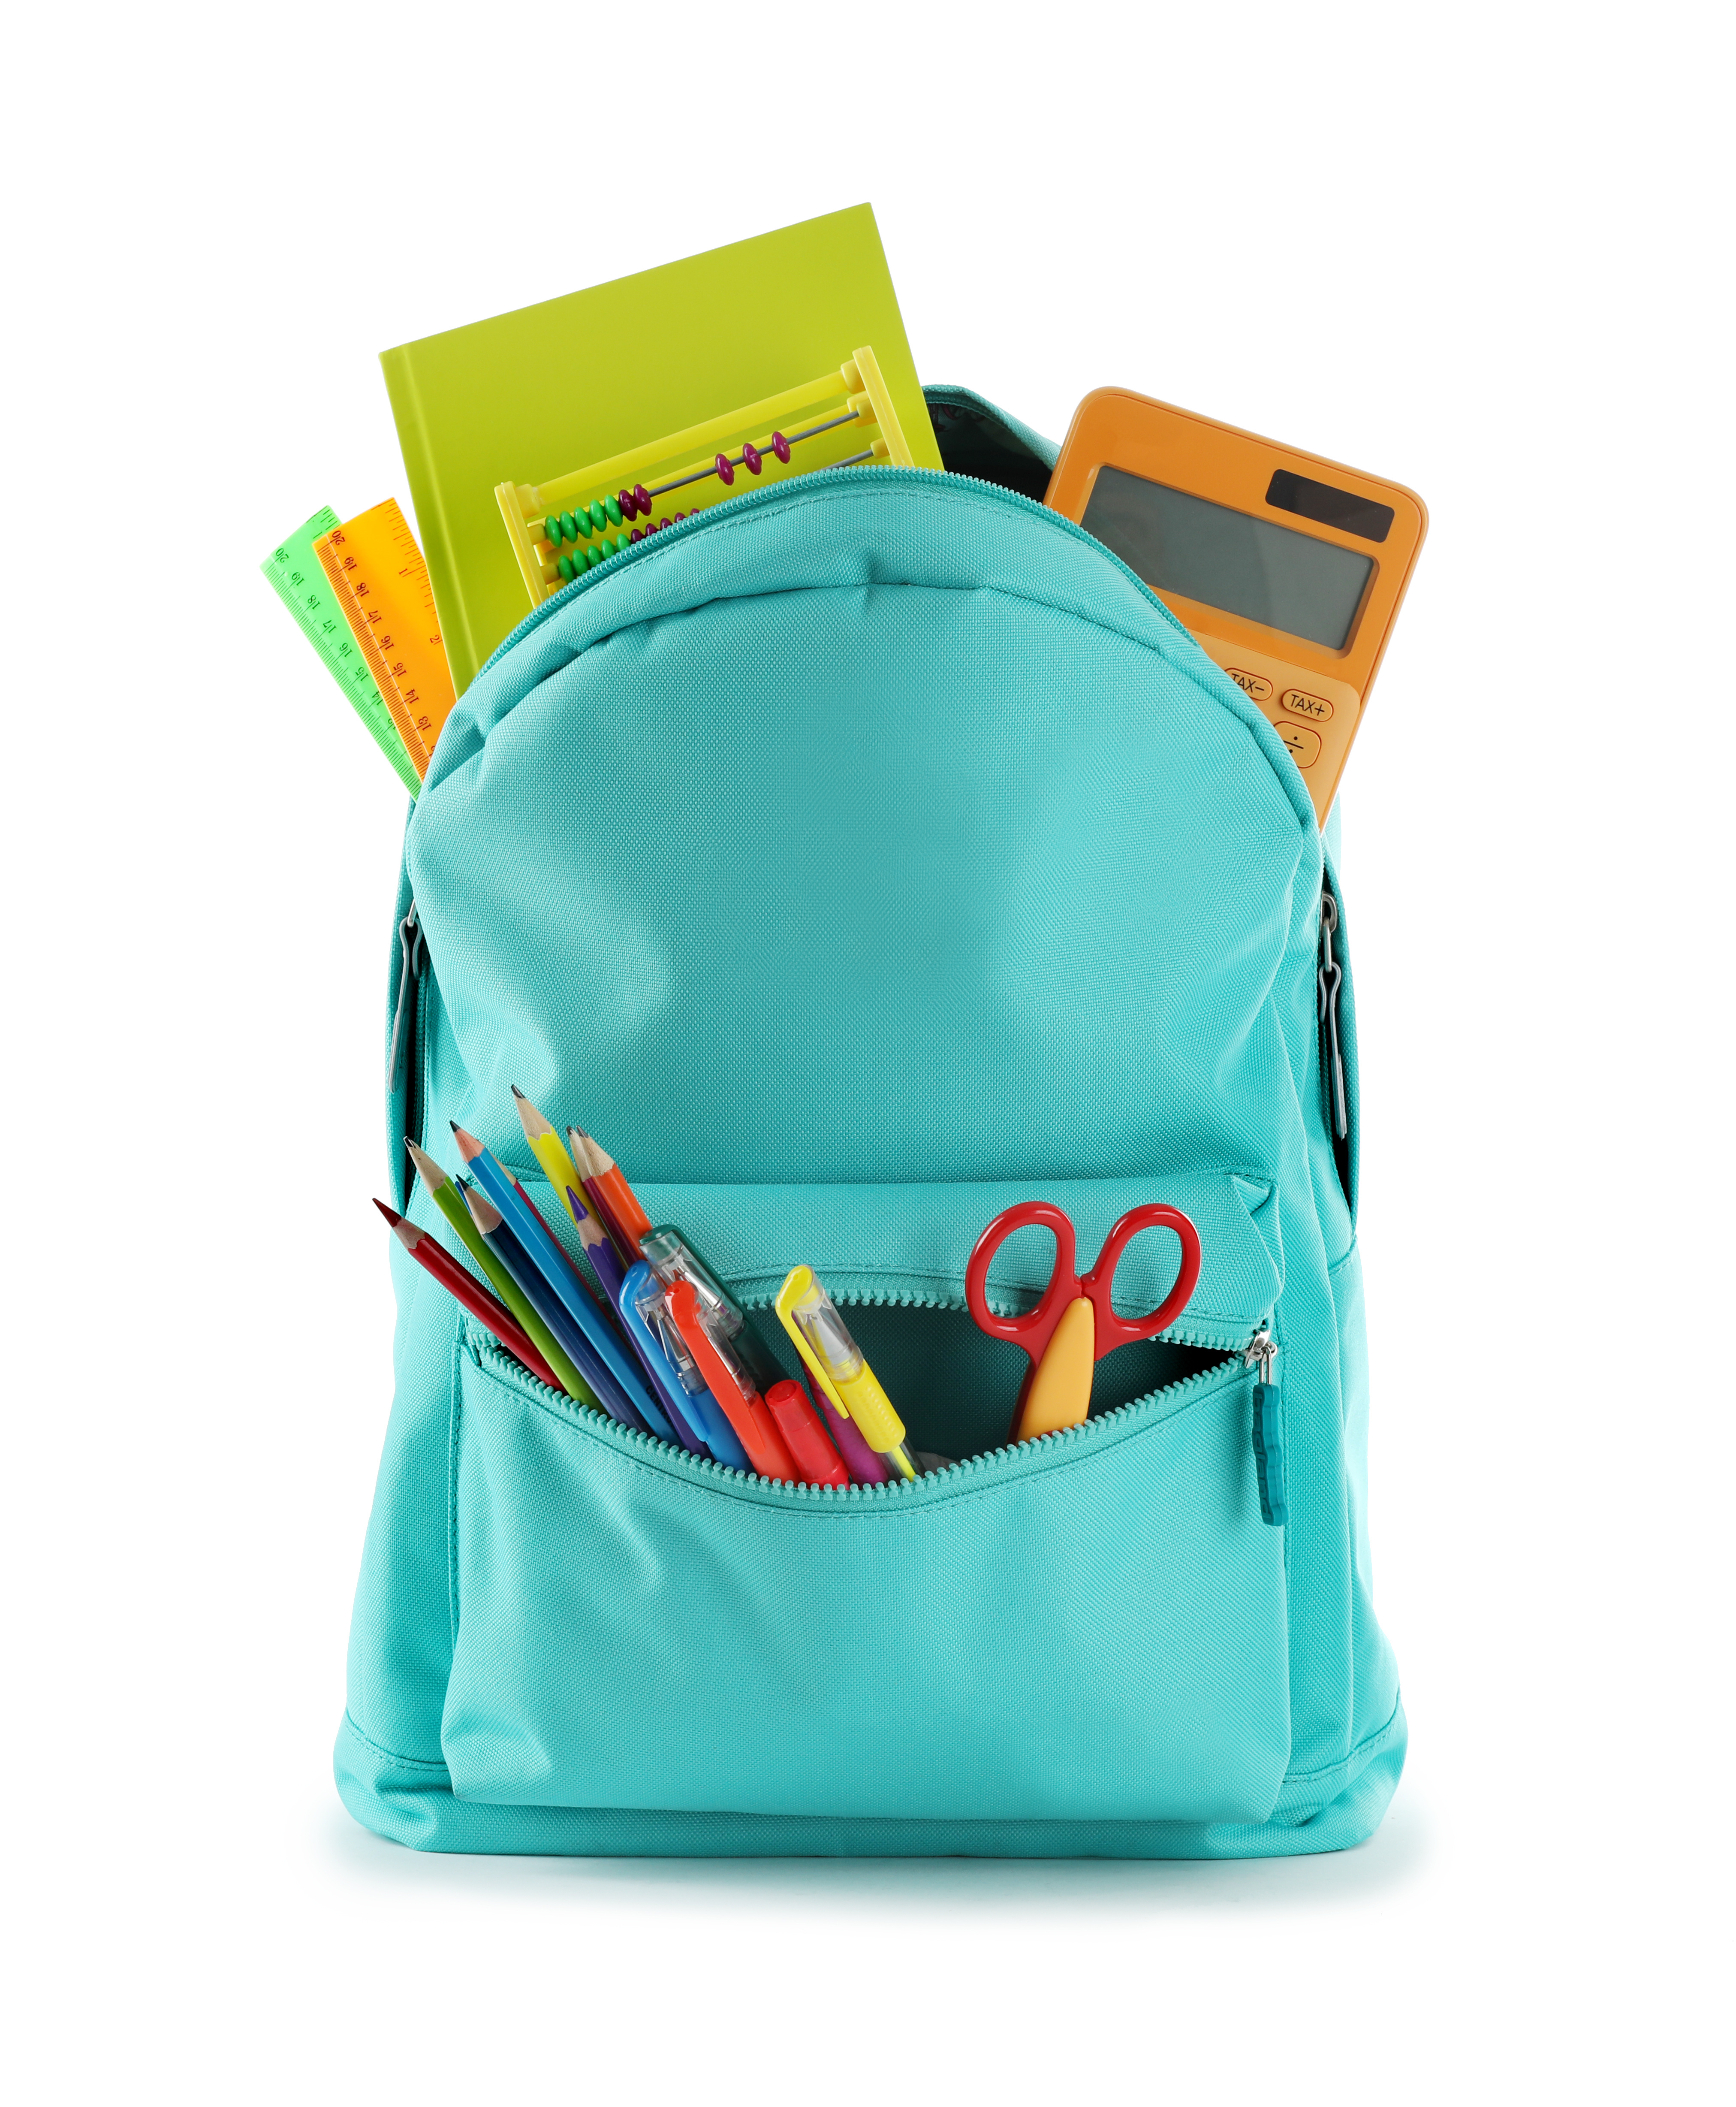 school supplies backpack